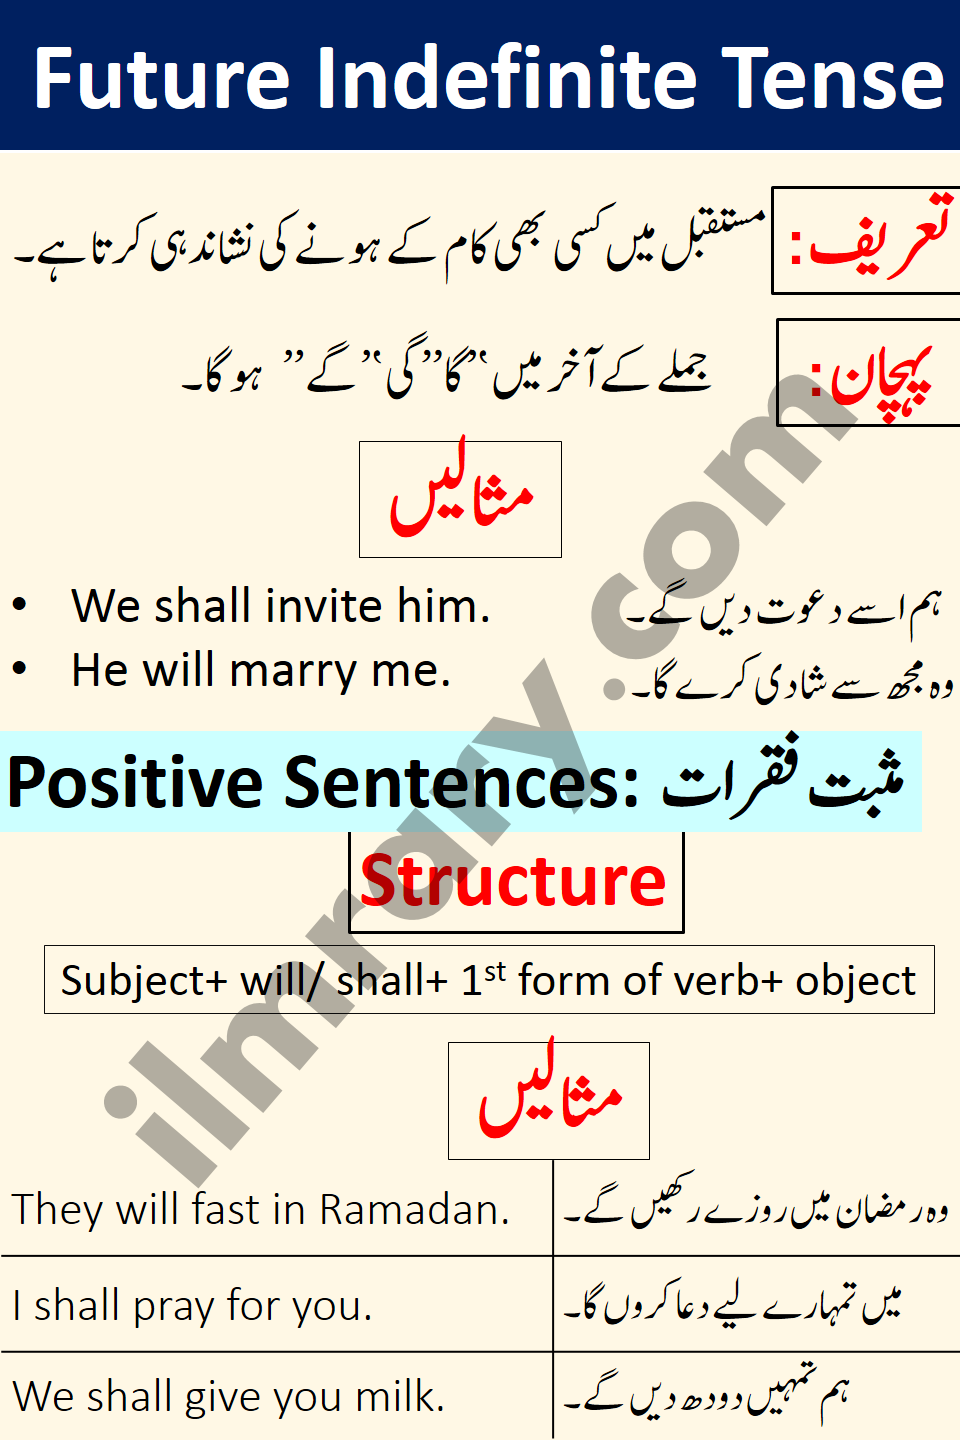 Positive Sentences for Future indefinite Tense in Urdu